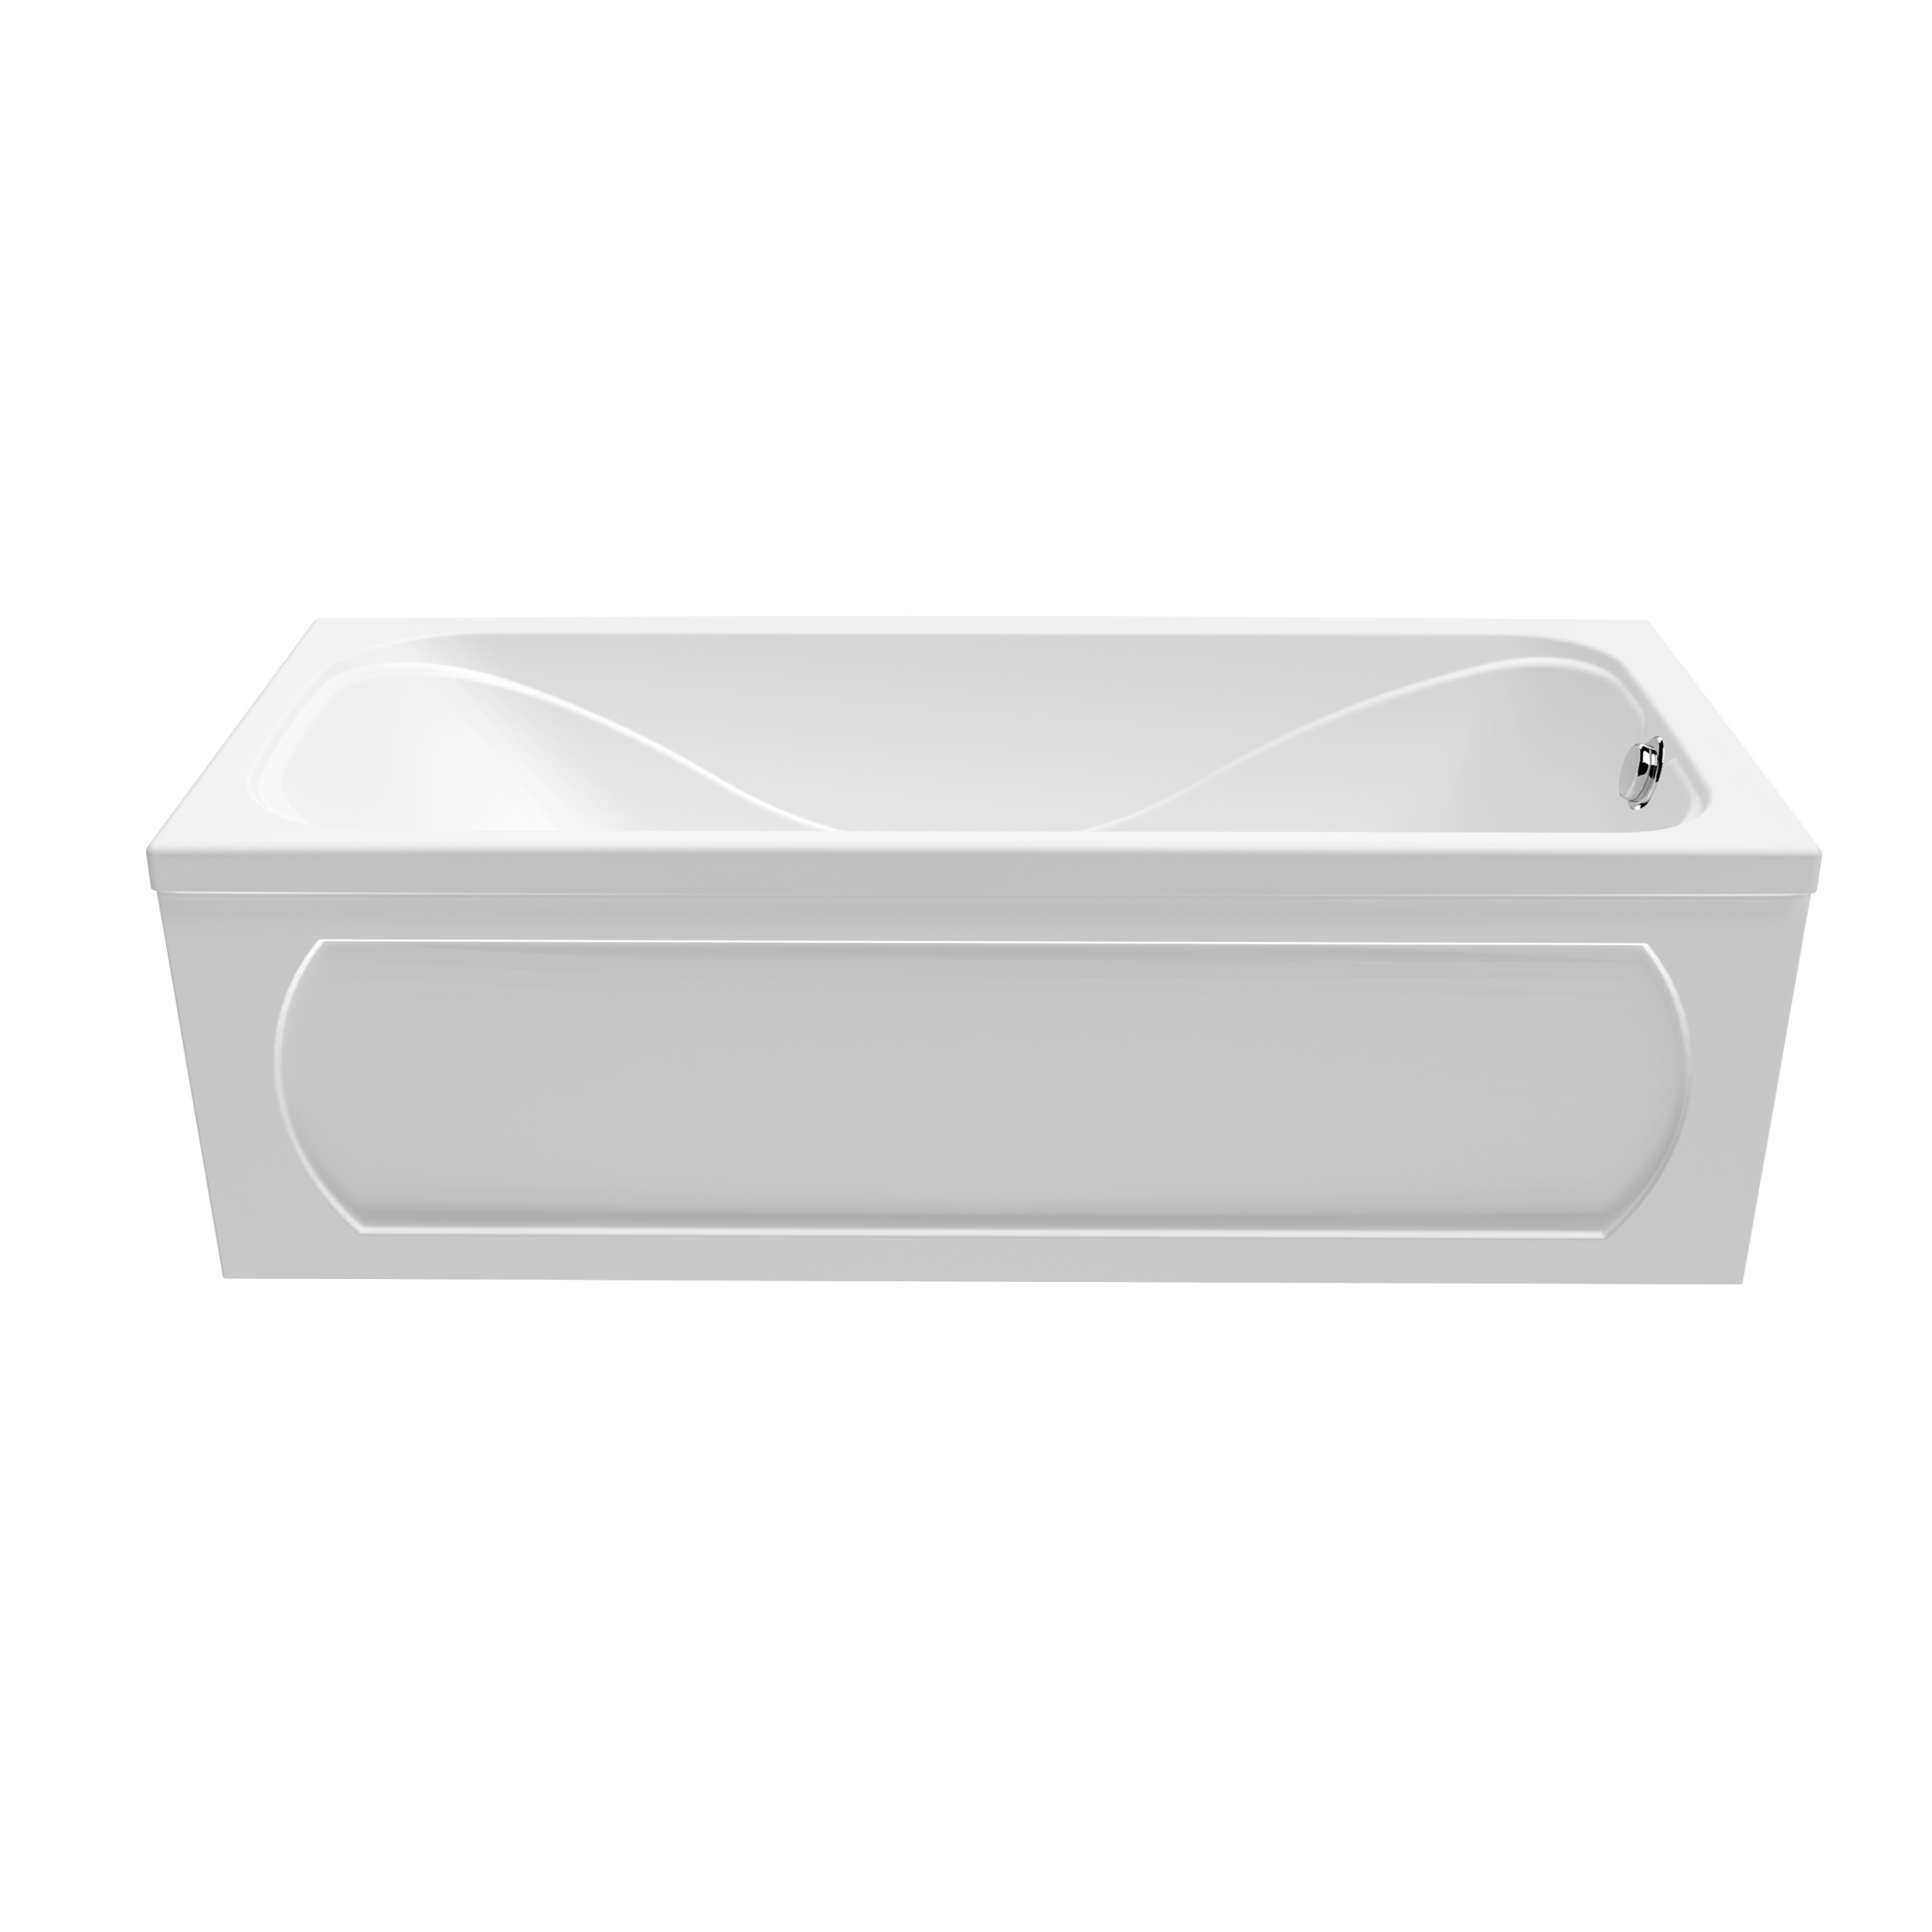 Ванна Triton Стандарт 150х70, (комплектация: ванна, ножки для ванны, экран лицевой, слив-перелив полуавтомат)